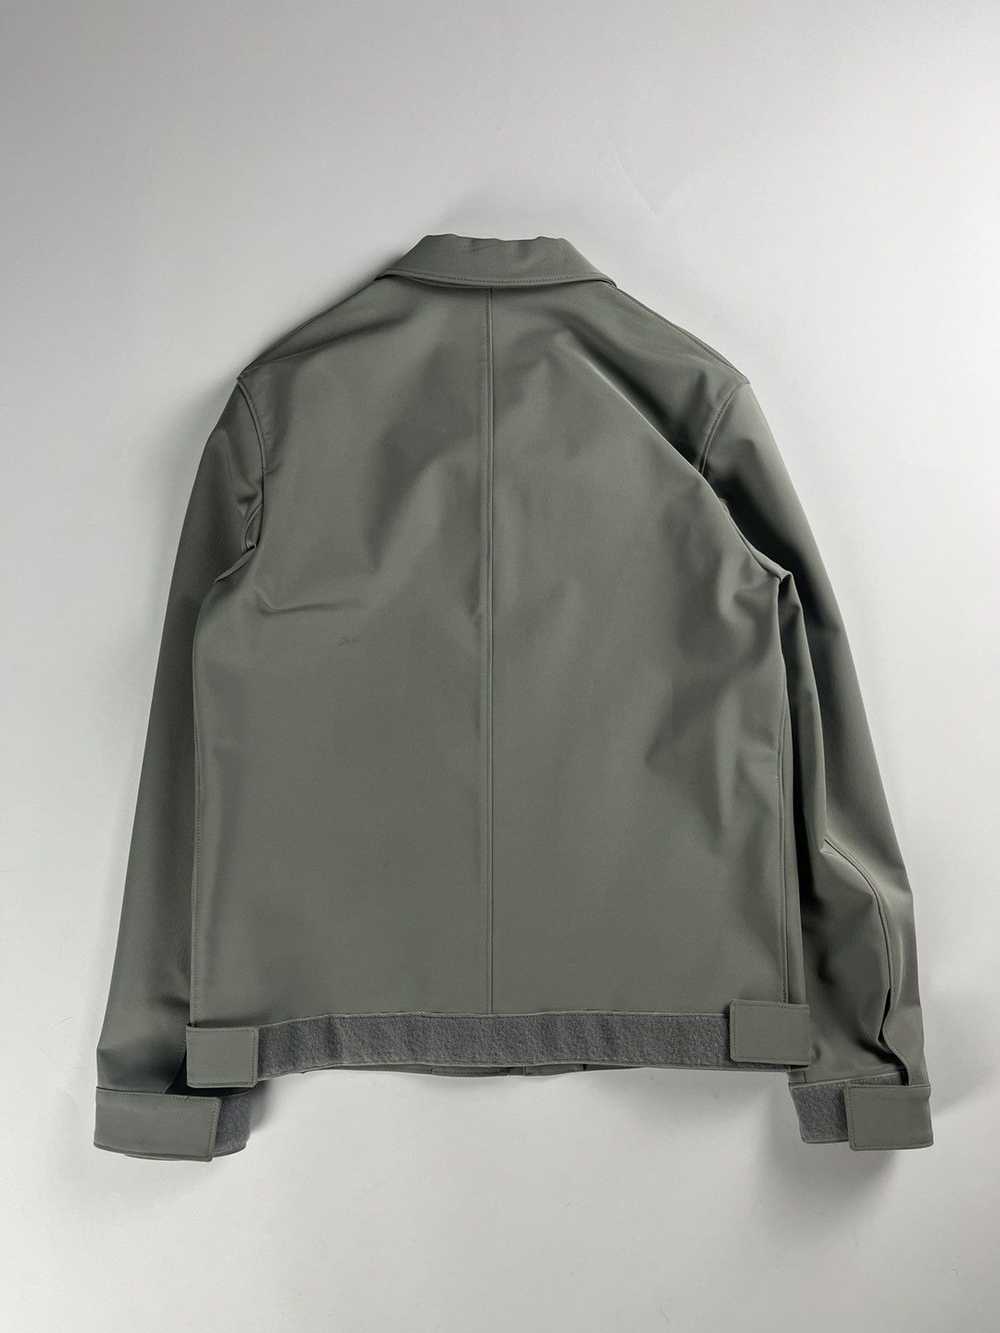 Prada Prada Strapped Nylon Jacket FW 1998 - image 4